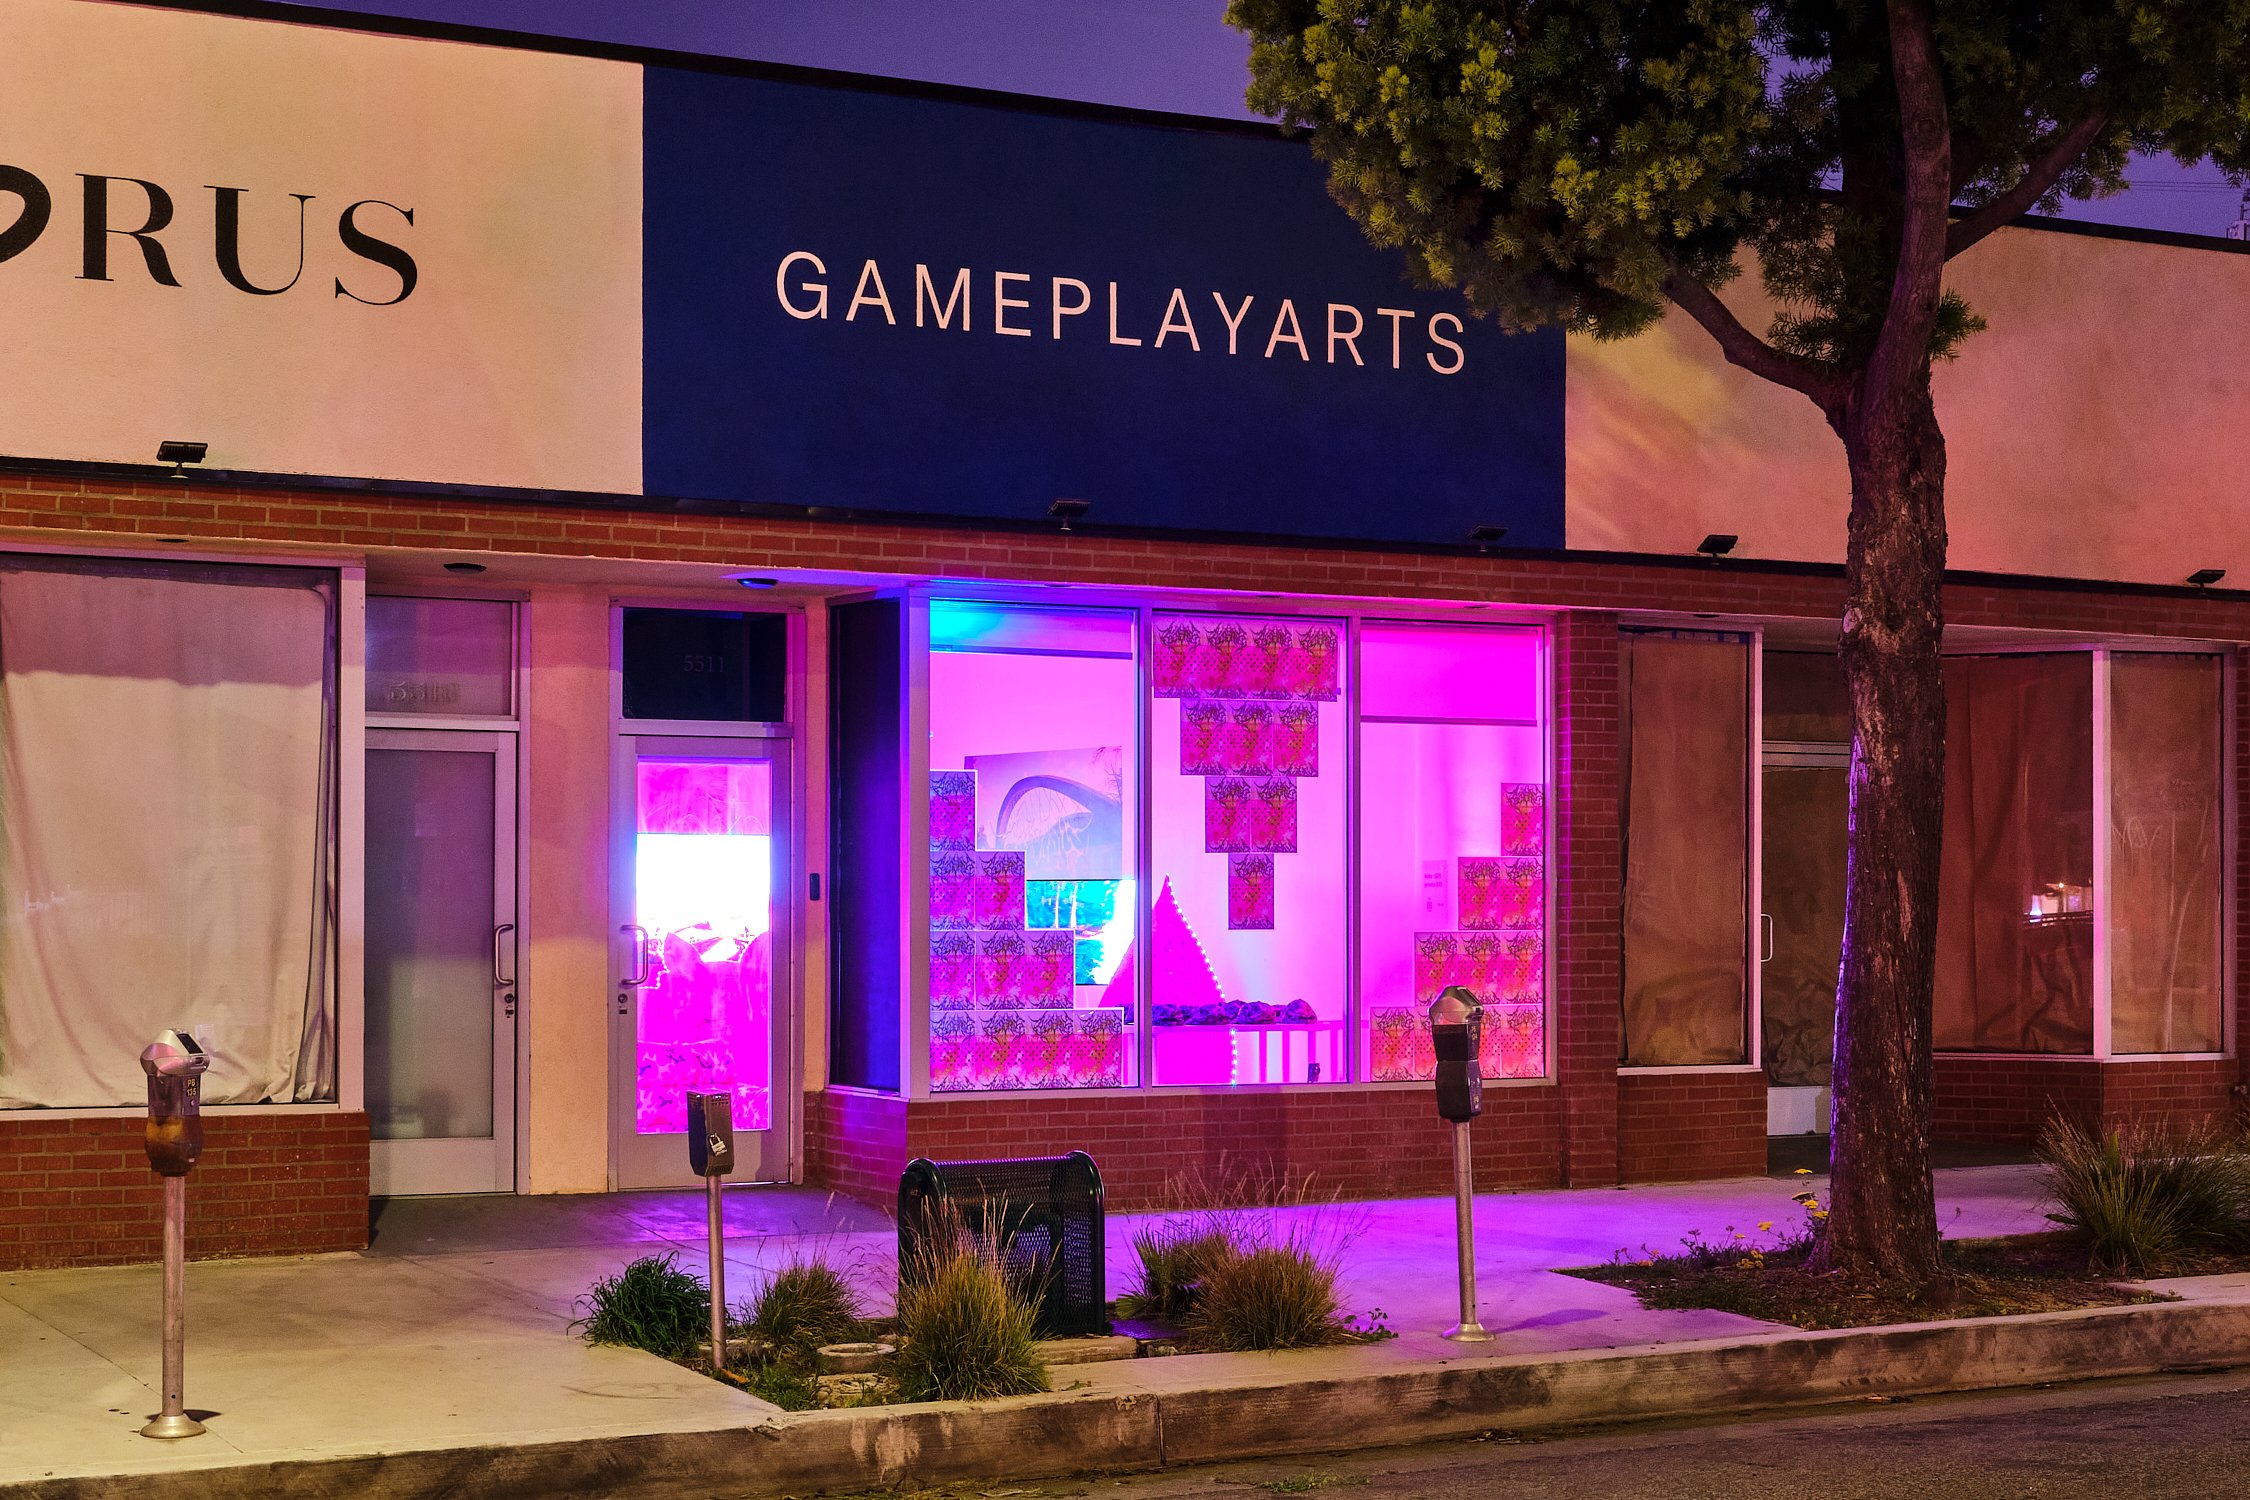  Gameplayarts is located at  5511 W. Pico Blvd. in Los Angeles California   Photo credit: Sam Hanke 